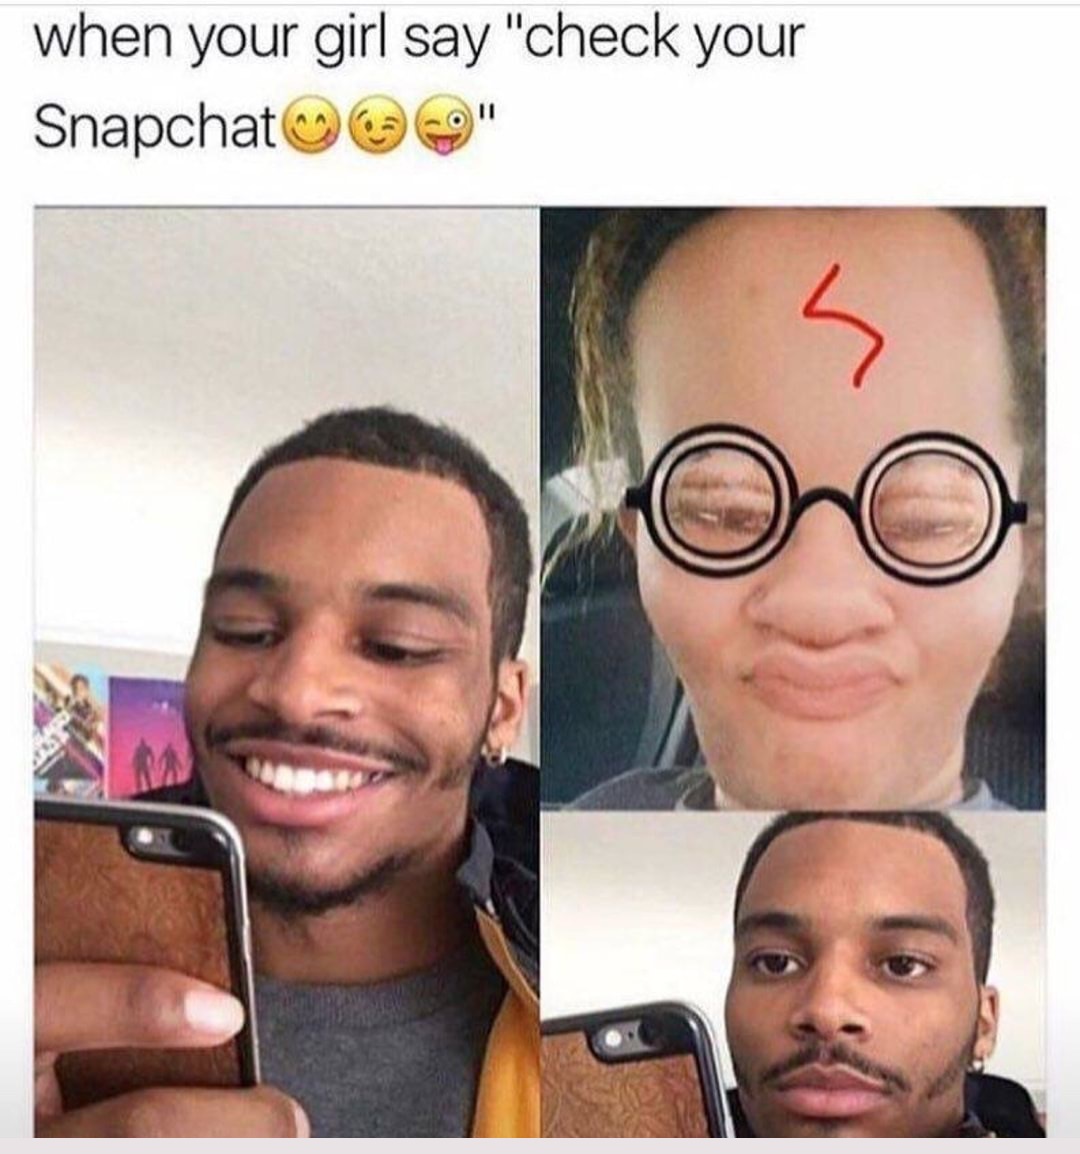 dank meme your girl say check your snapchat - when your girl say "check your Snapchat 20"